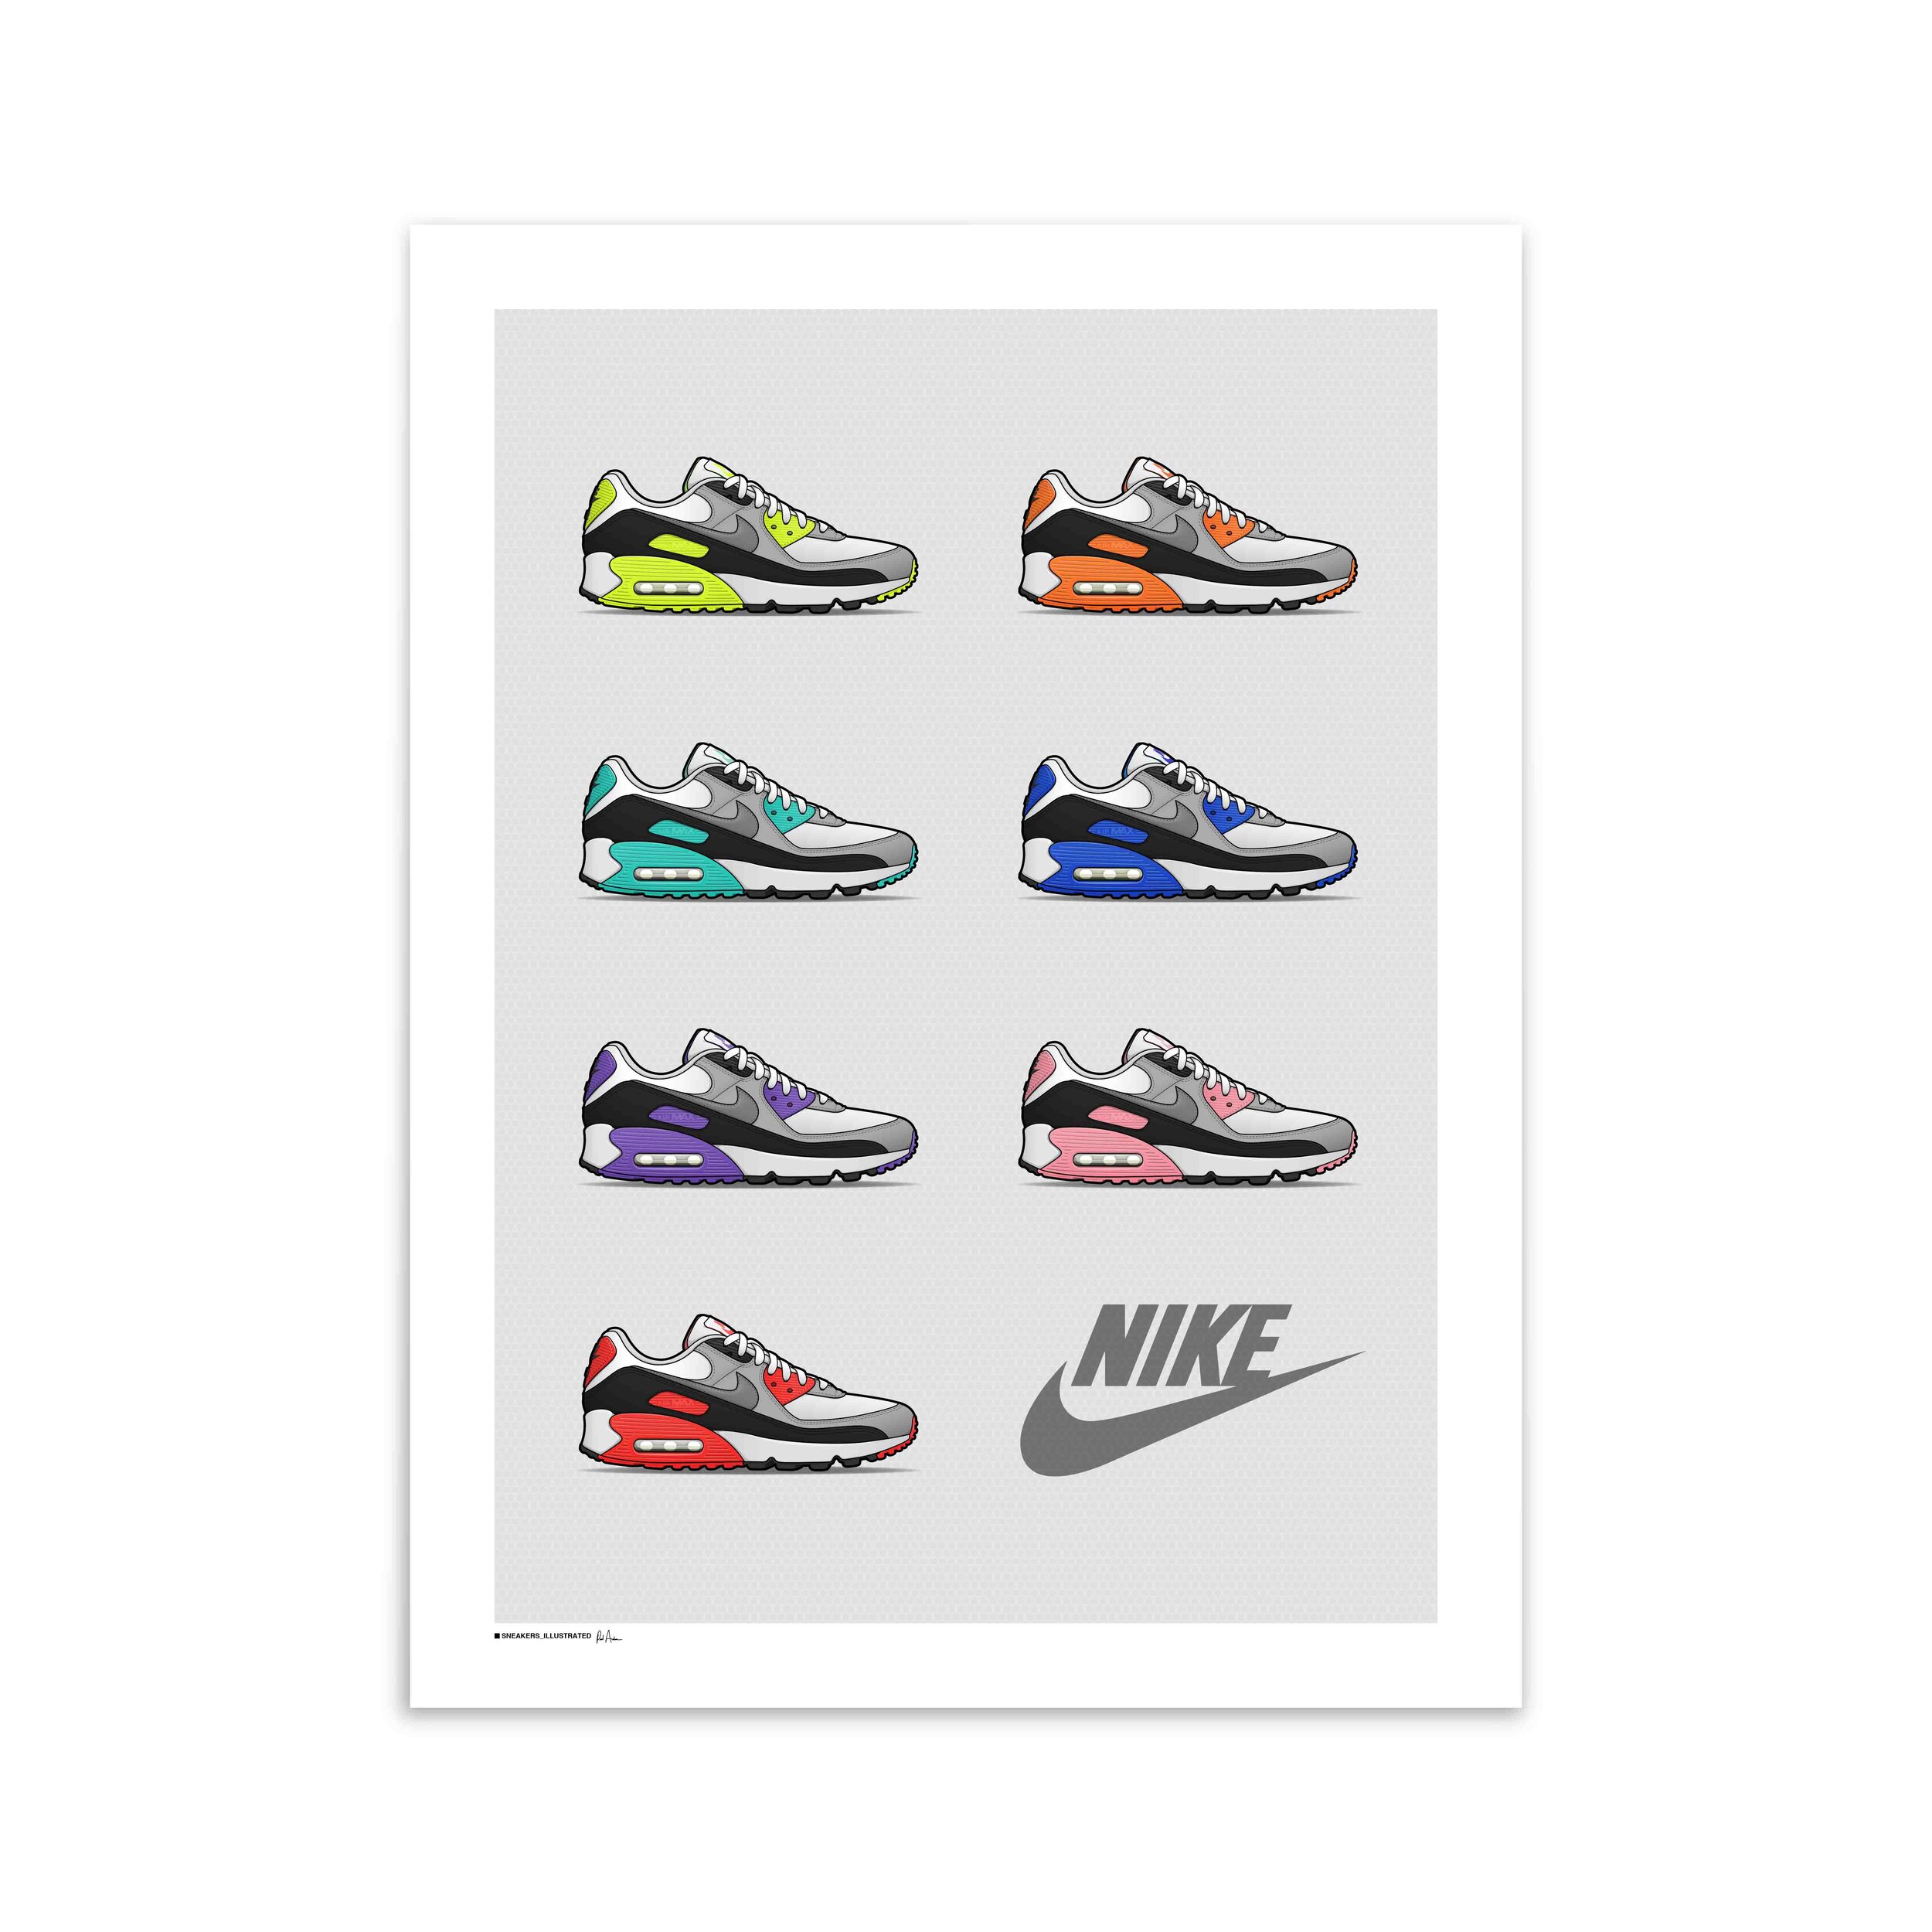 فول مدمس مقشور Nike Air Max 90 Collection Poster — Sneakers Illustrated فول مدمس مقشور